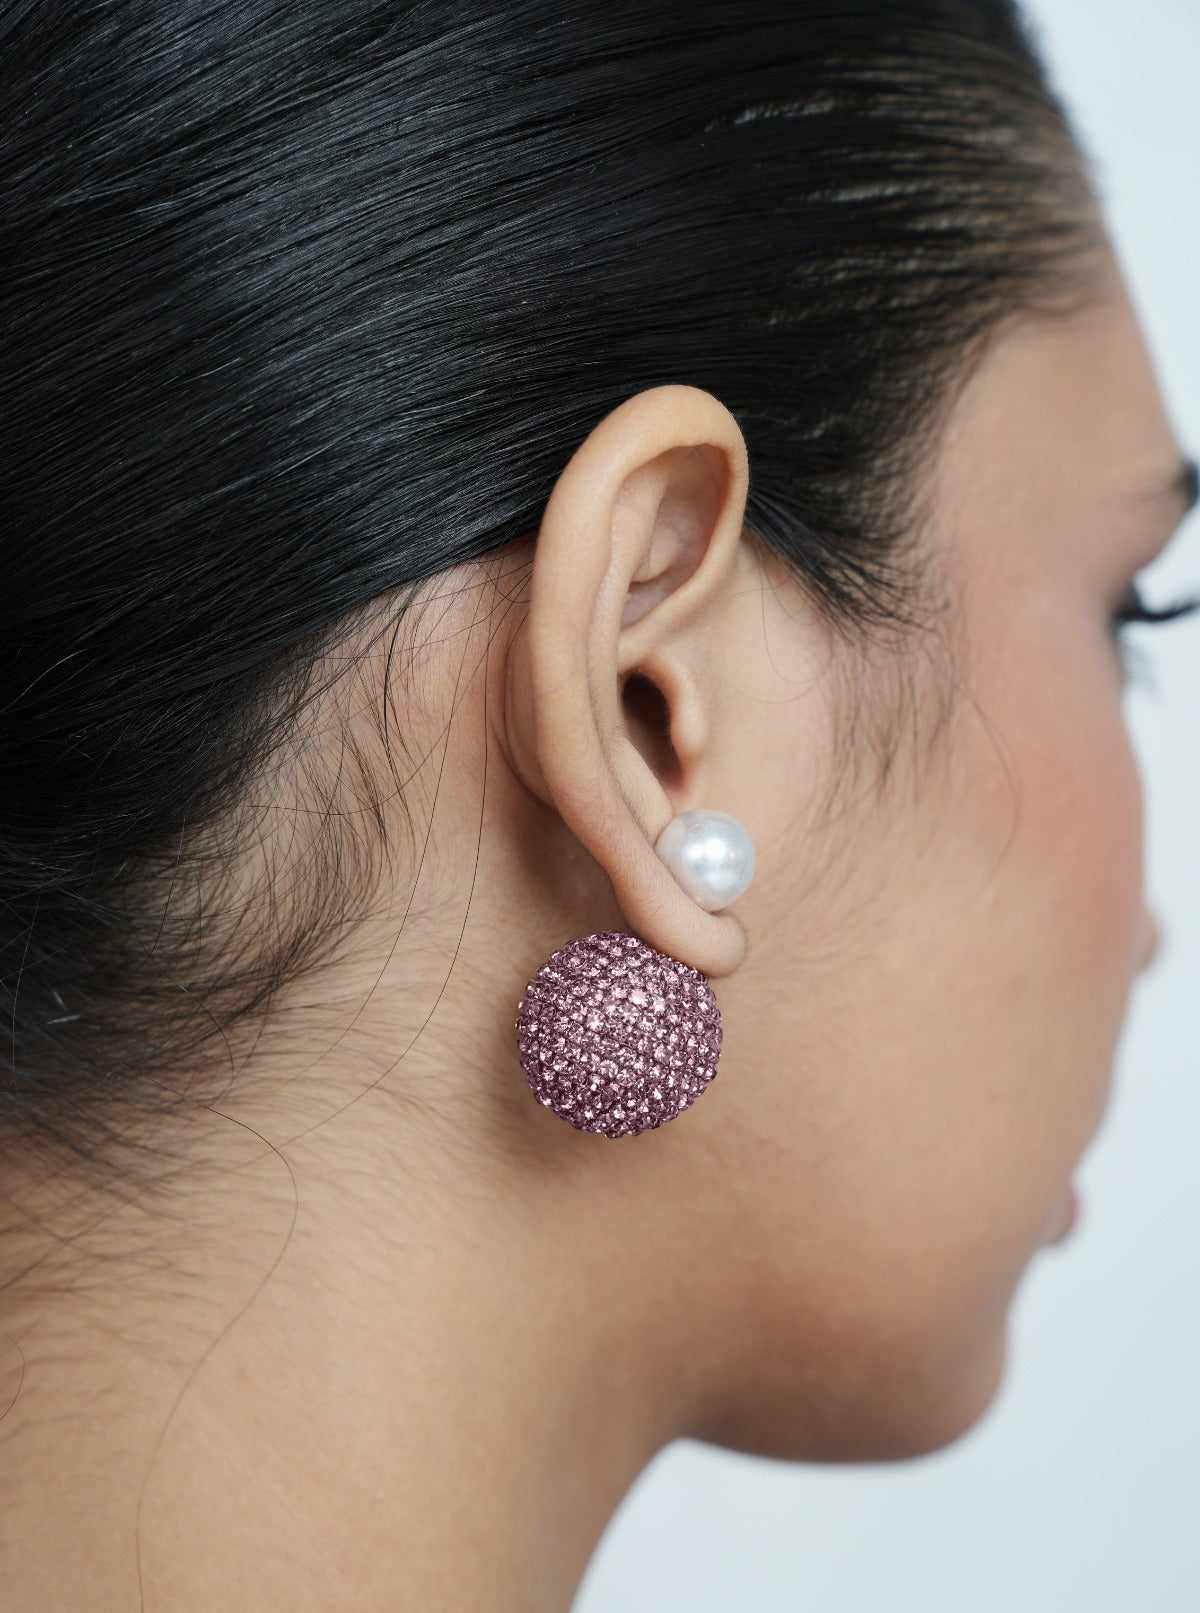 Amama,Nano Meteor Earrings In Lilac